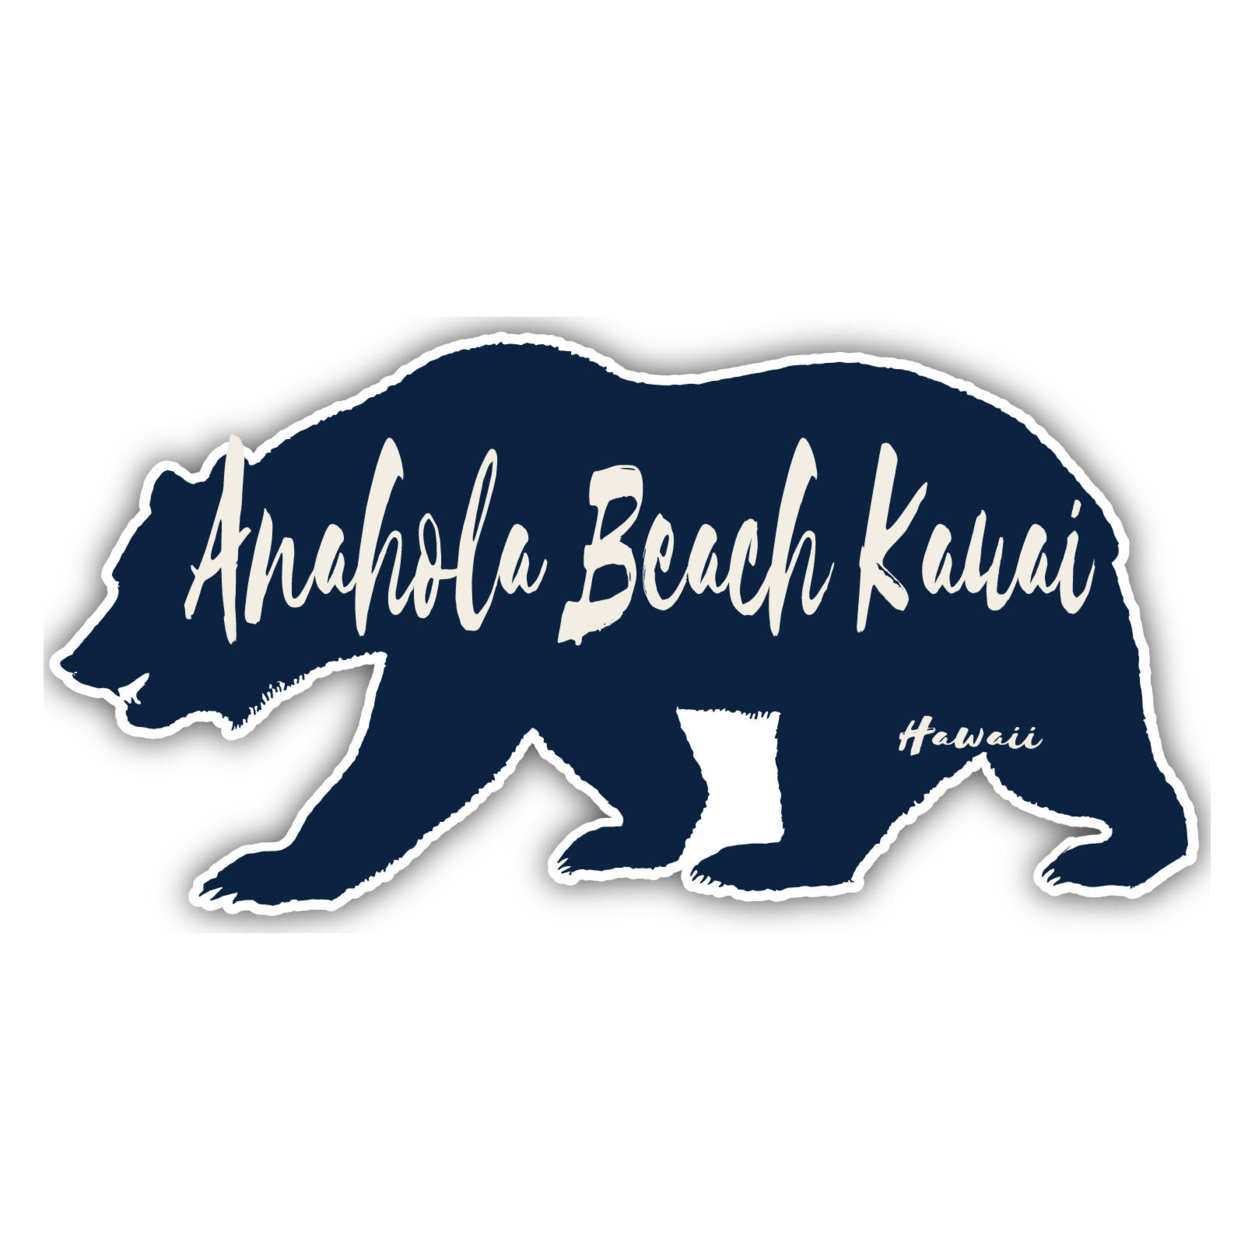 Anahola Beach Kauai Hawaii Souvenir Decorative Stickers (Choose Theme And Size) - Single Unit, 8-Inch, Bear